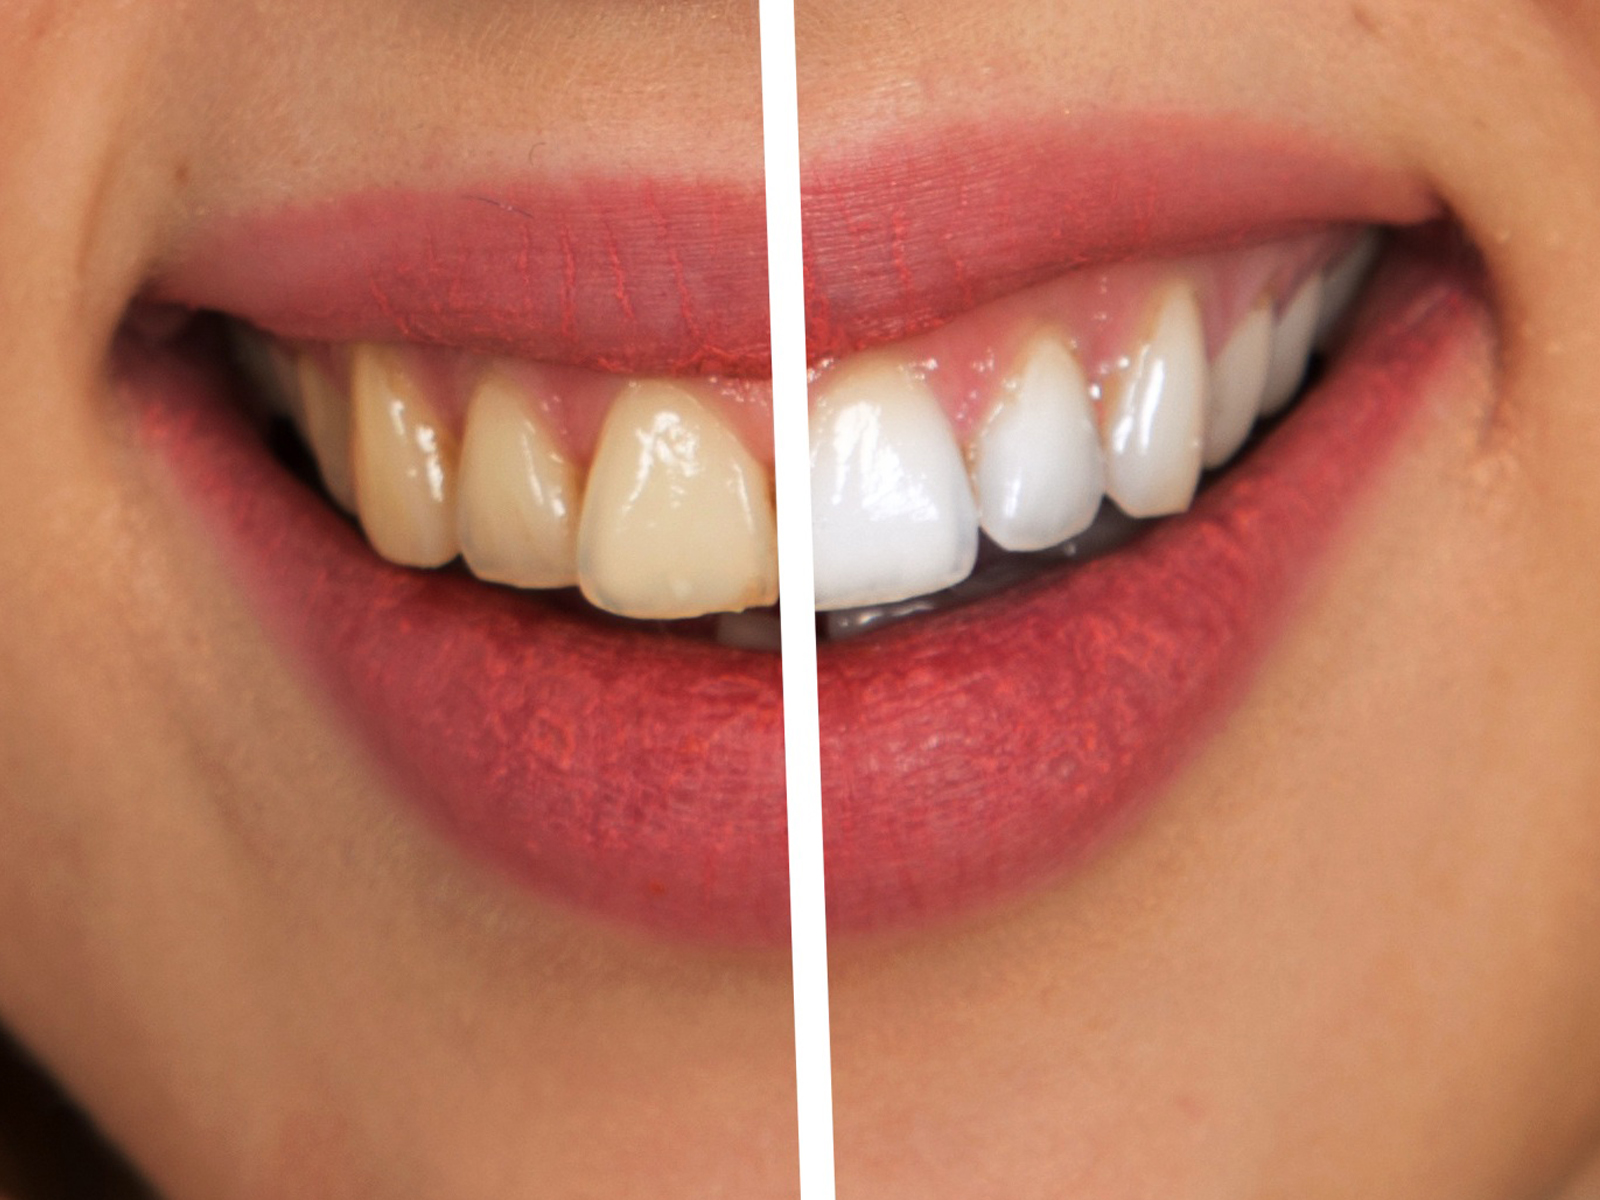 Can yellow teeth get white again?